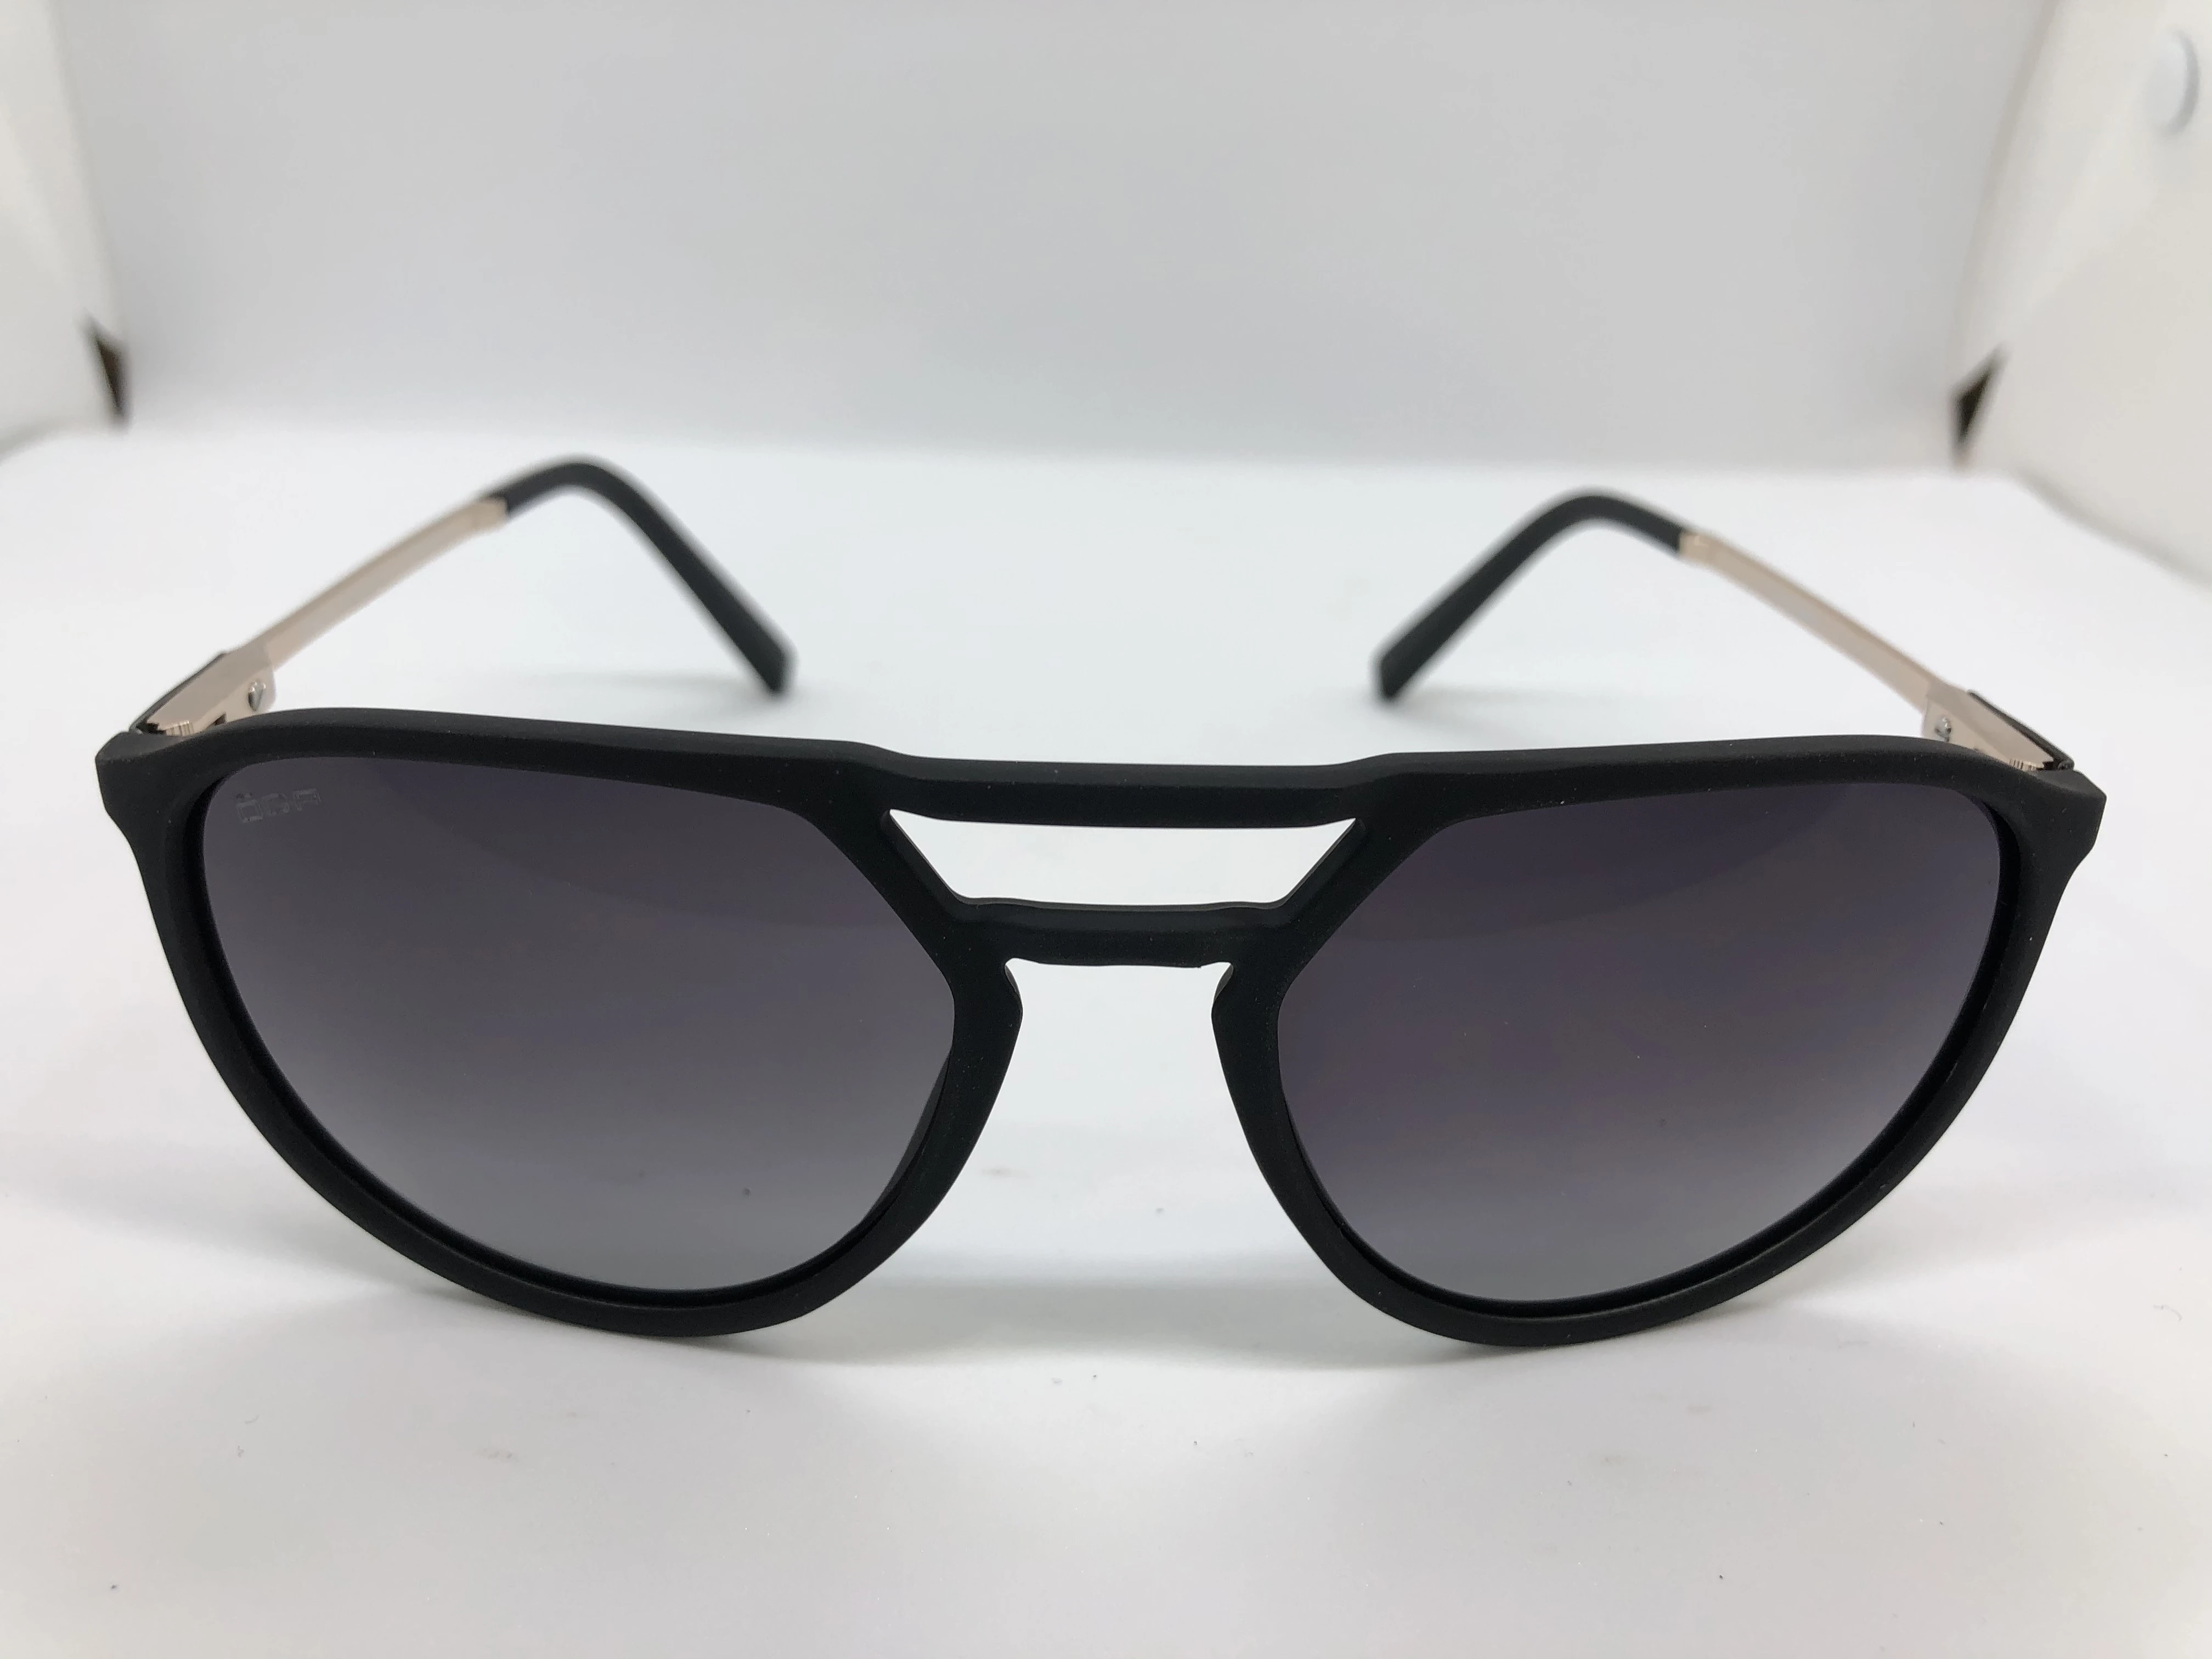 Sunglasses - from OGA - with black polycarbonate frame - black gradient lenses - and golden metal arm - for men